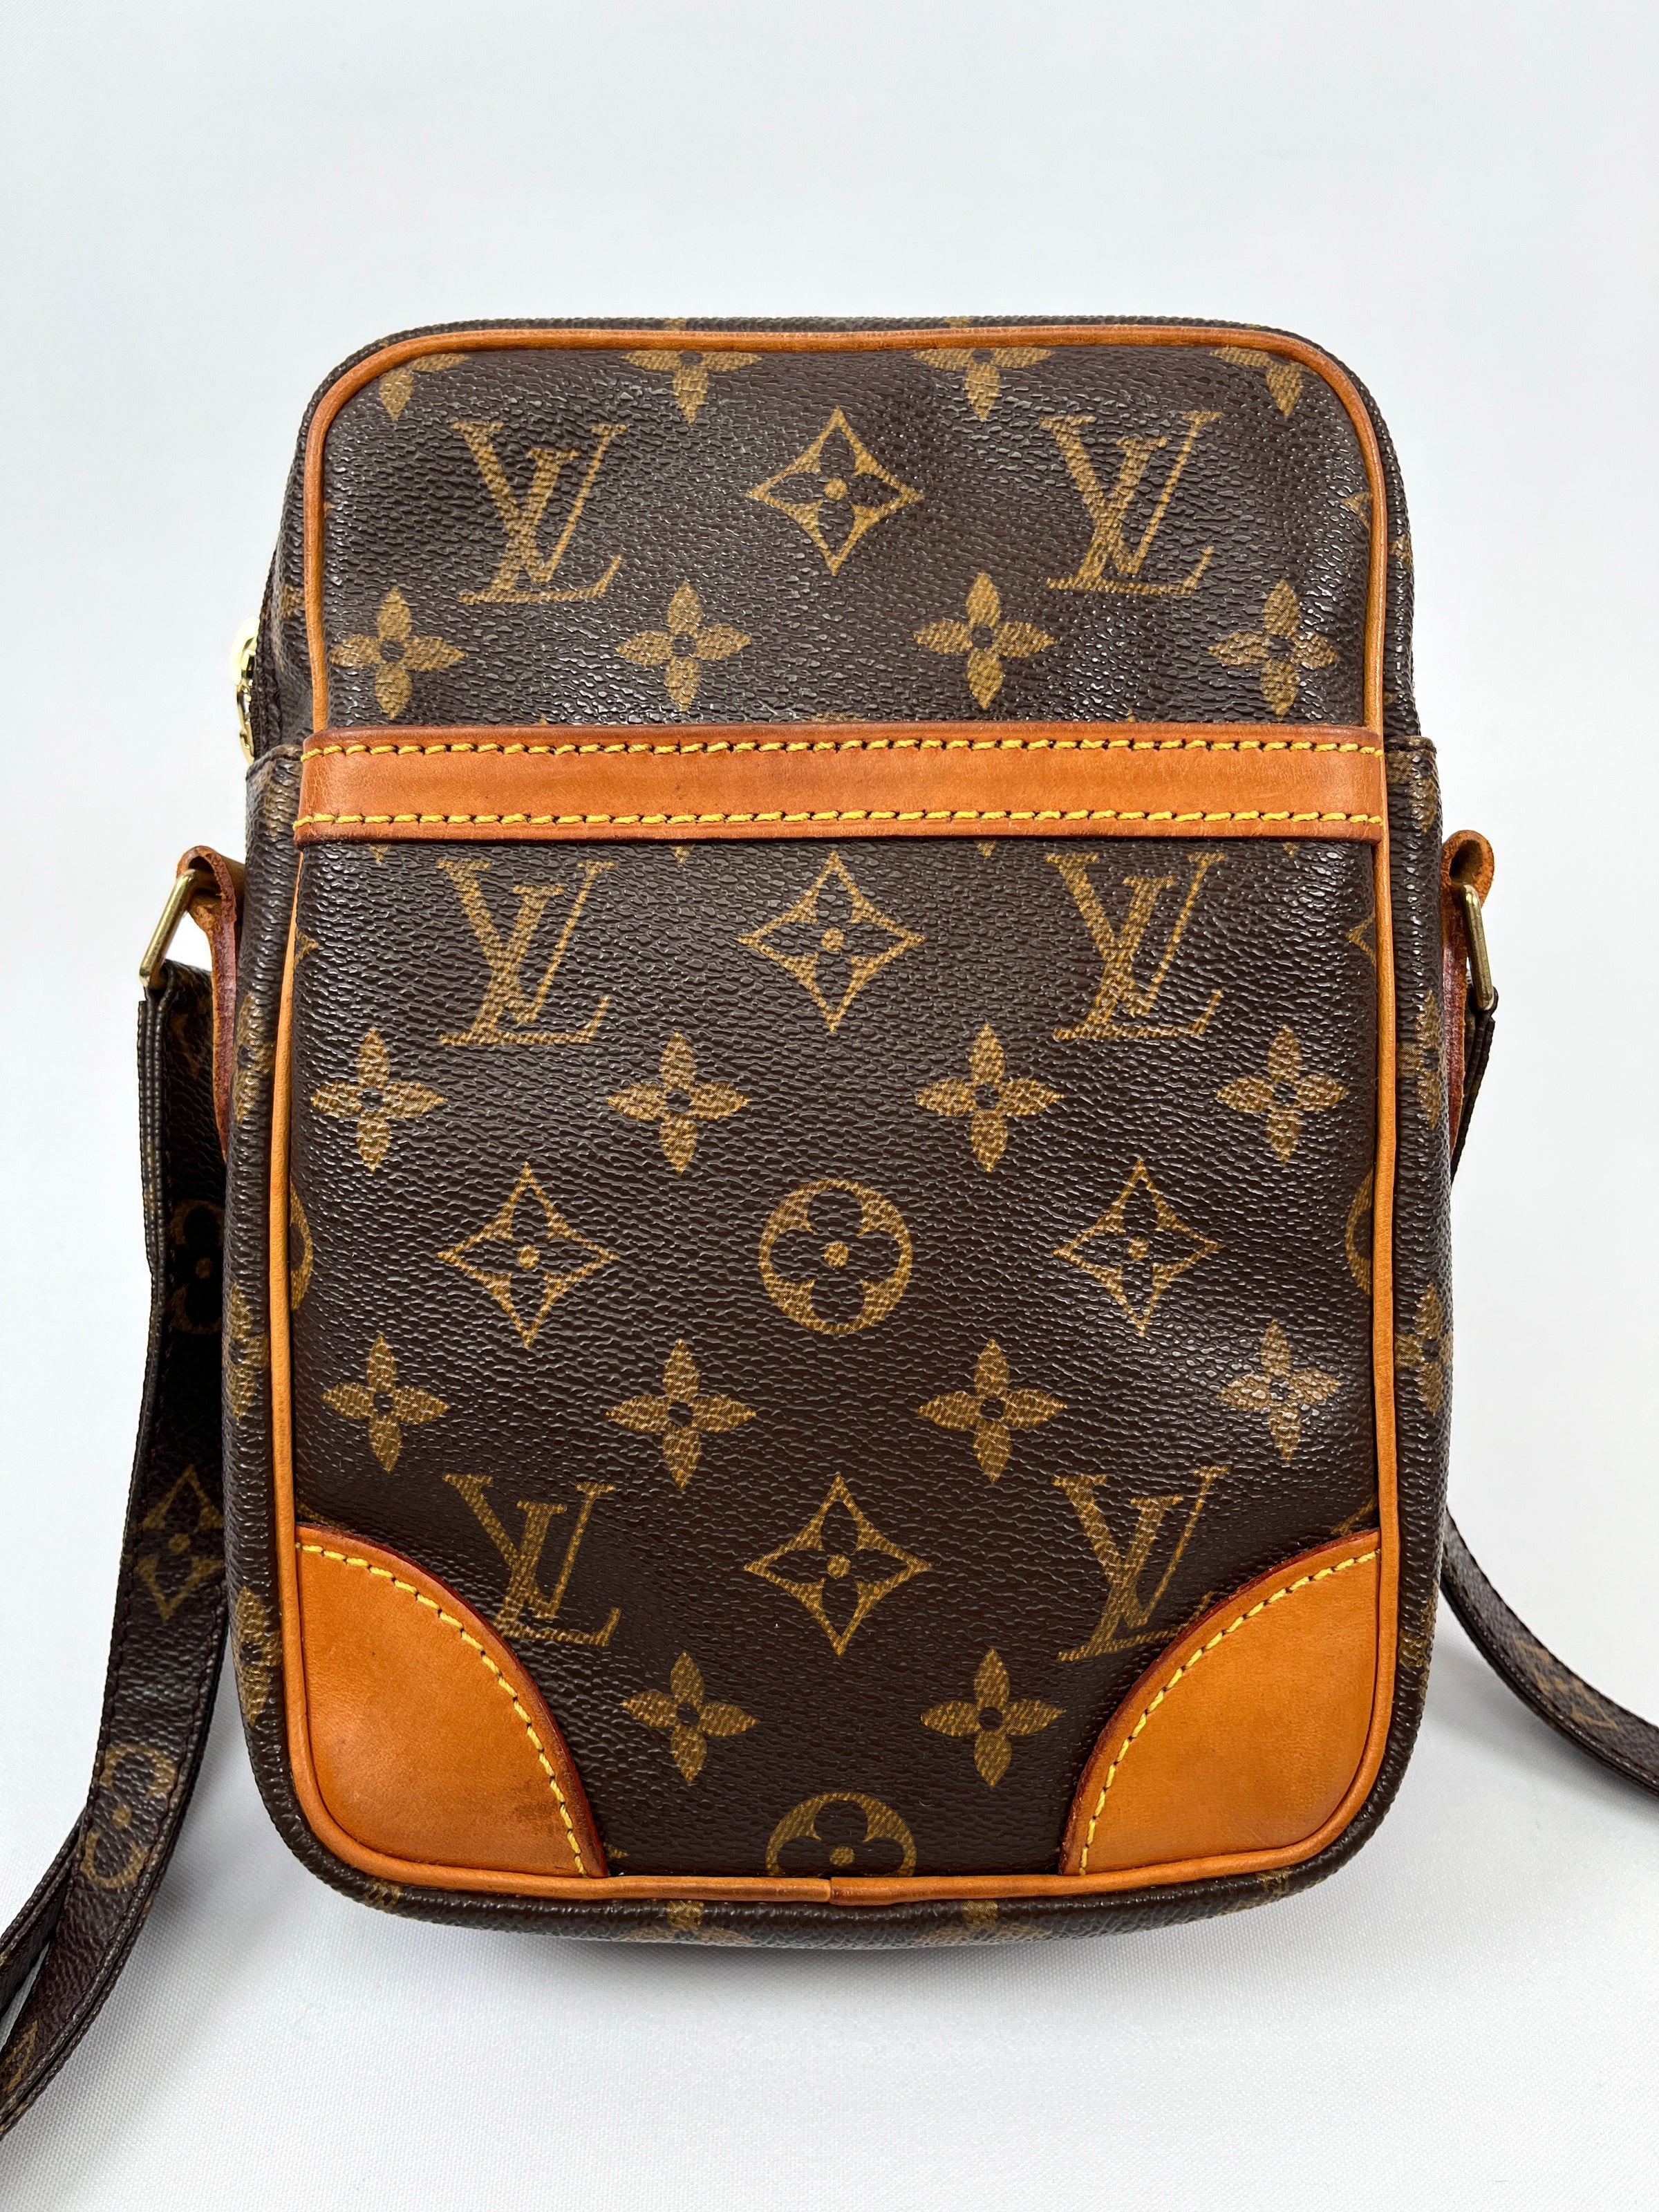 Shop for Louis Vuitton Monogram Canvas Leather Danube Crossbody